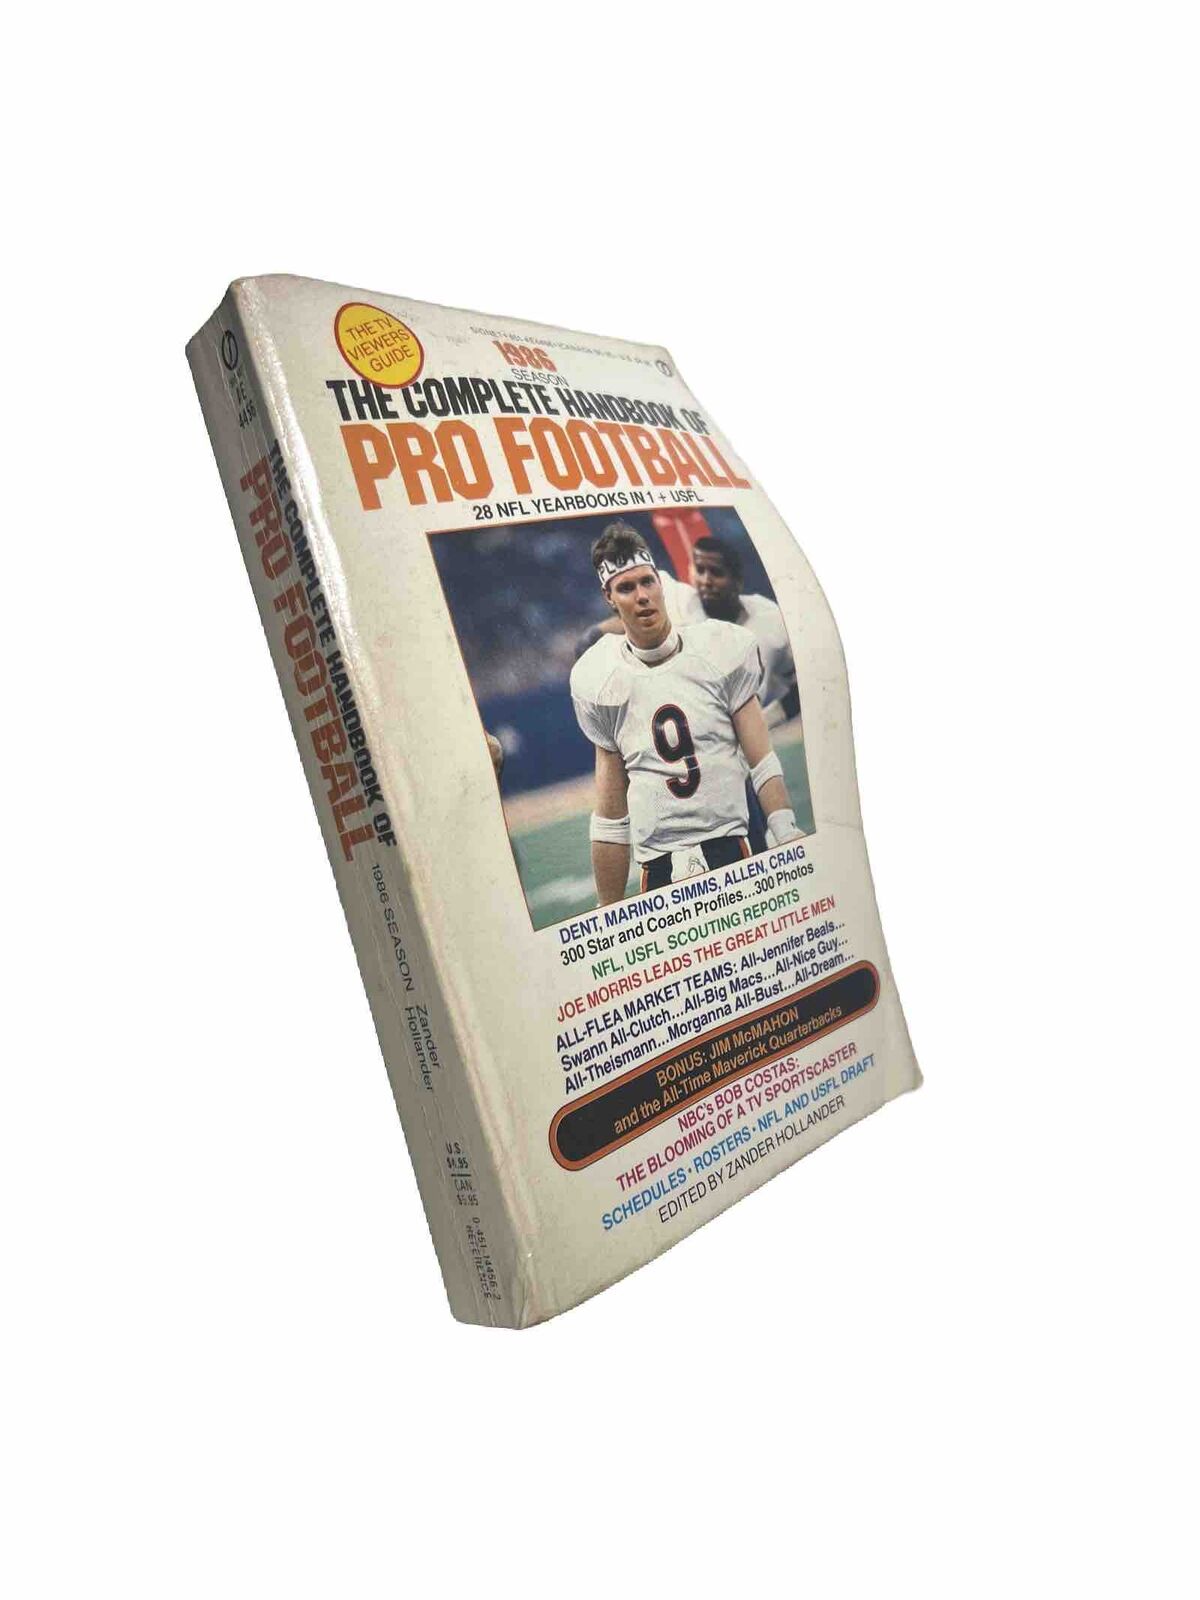 The Complete Handbook of pro football 1986 Season Chicago Bears